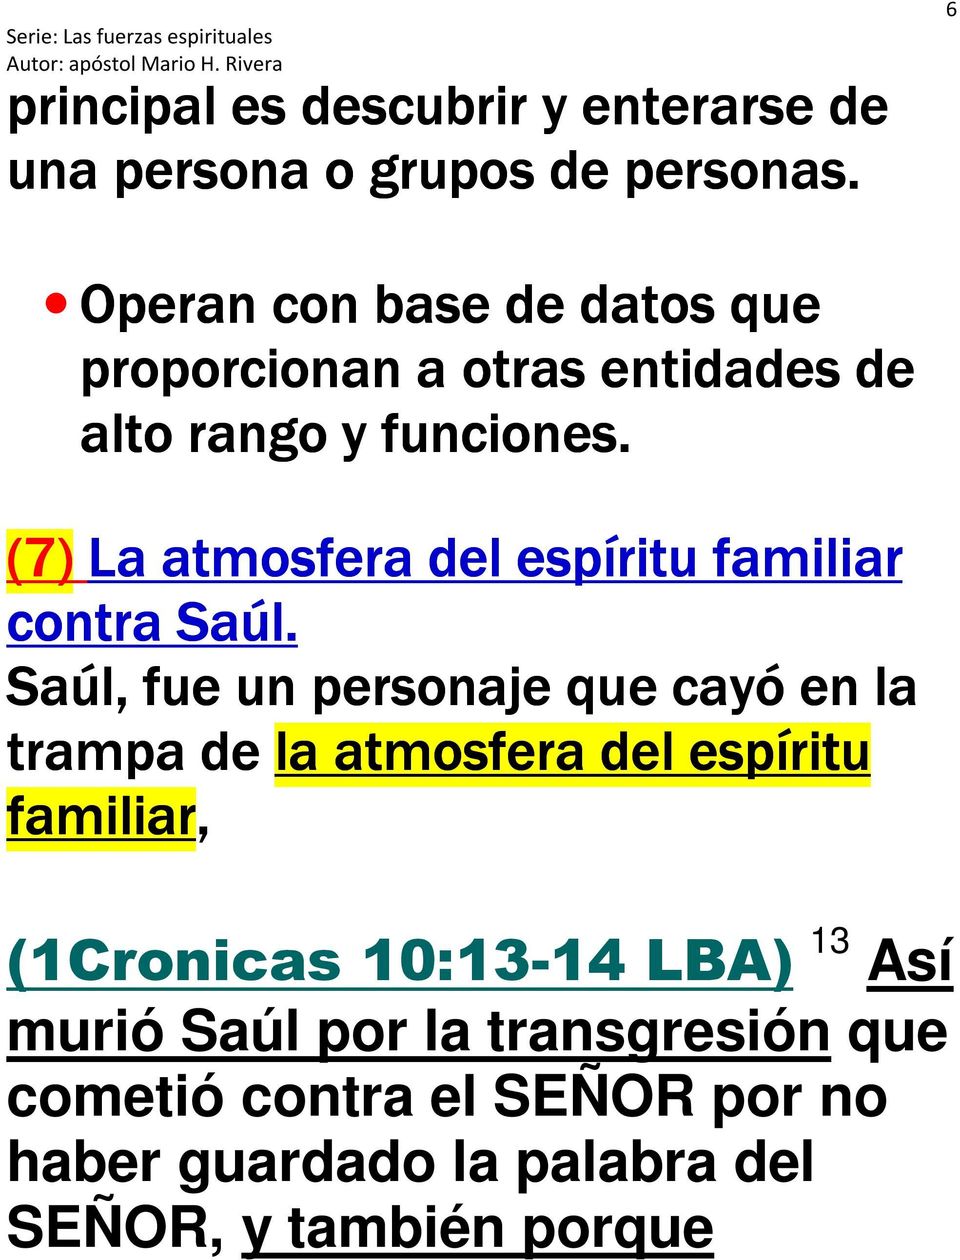 (7) La atmosfera del espíritu familiar contra Saúl.